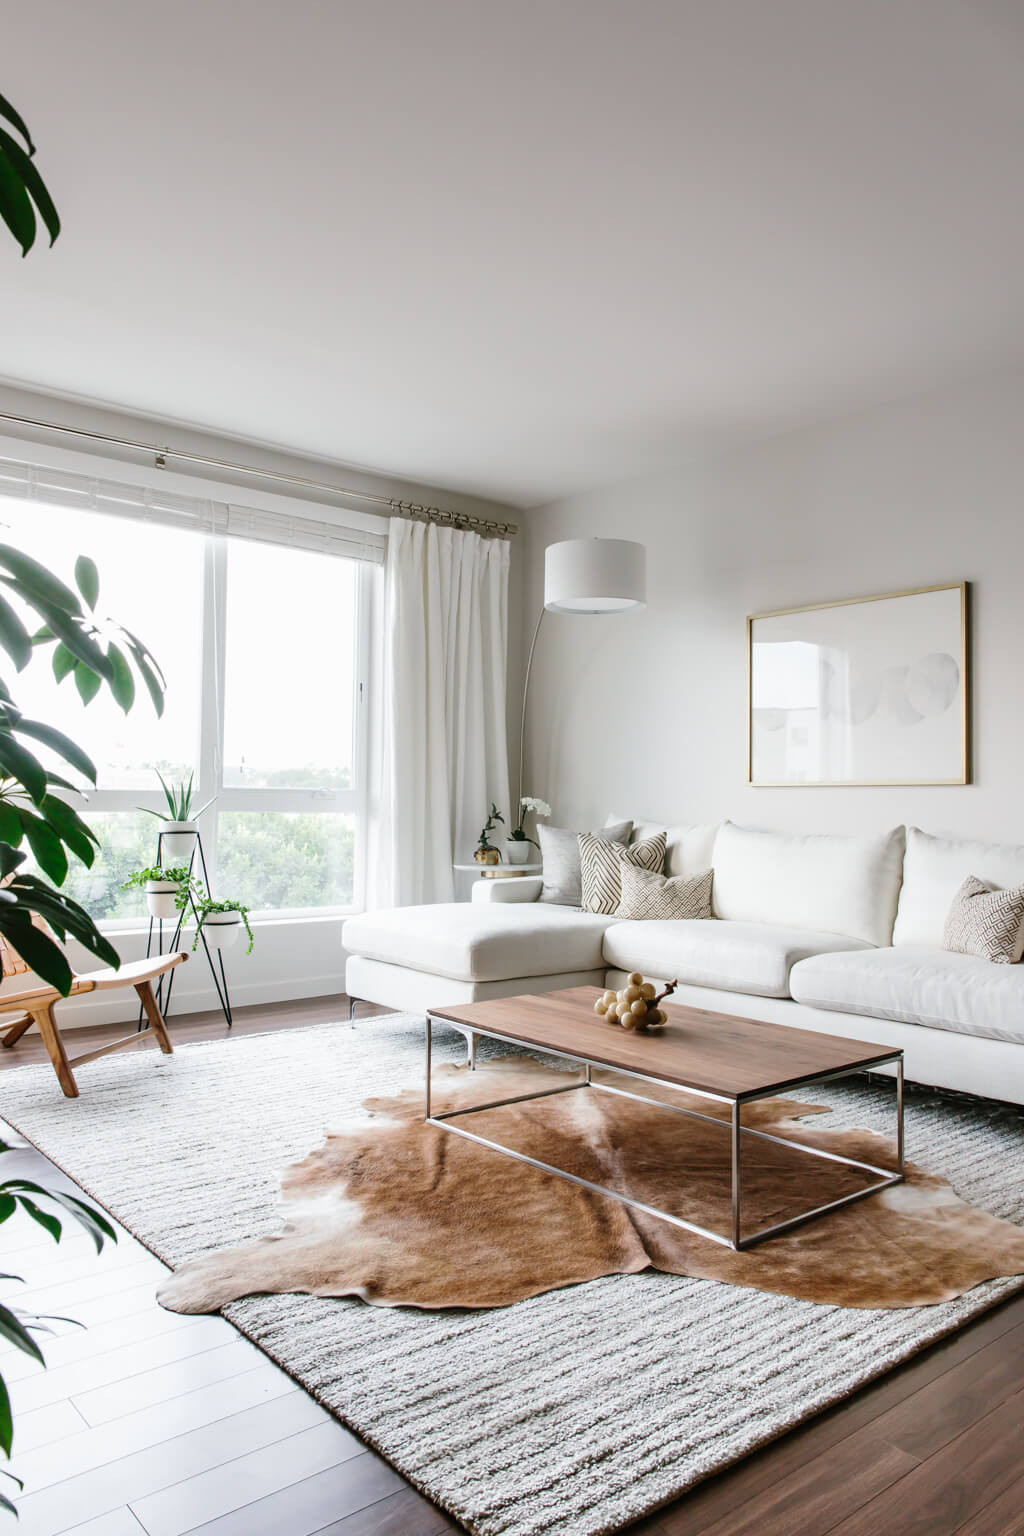 Minimalist Design Living Room
 Designing my Modern and Minimalist Living Room with